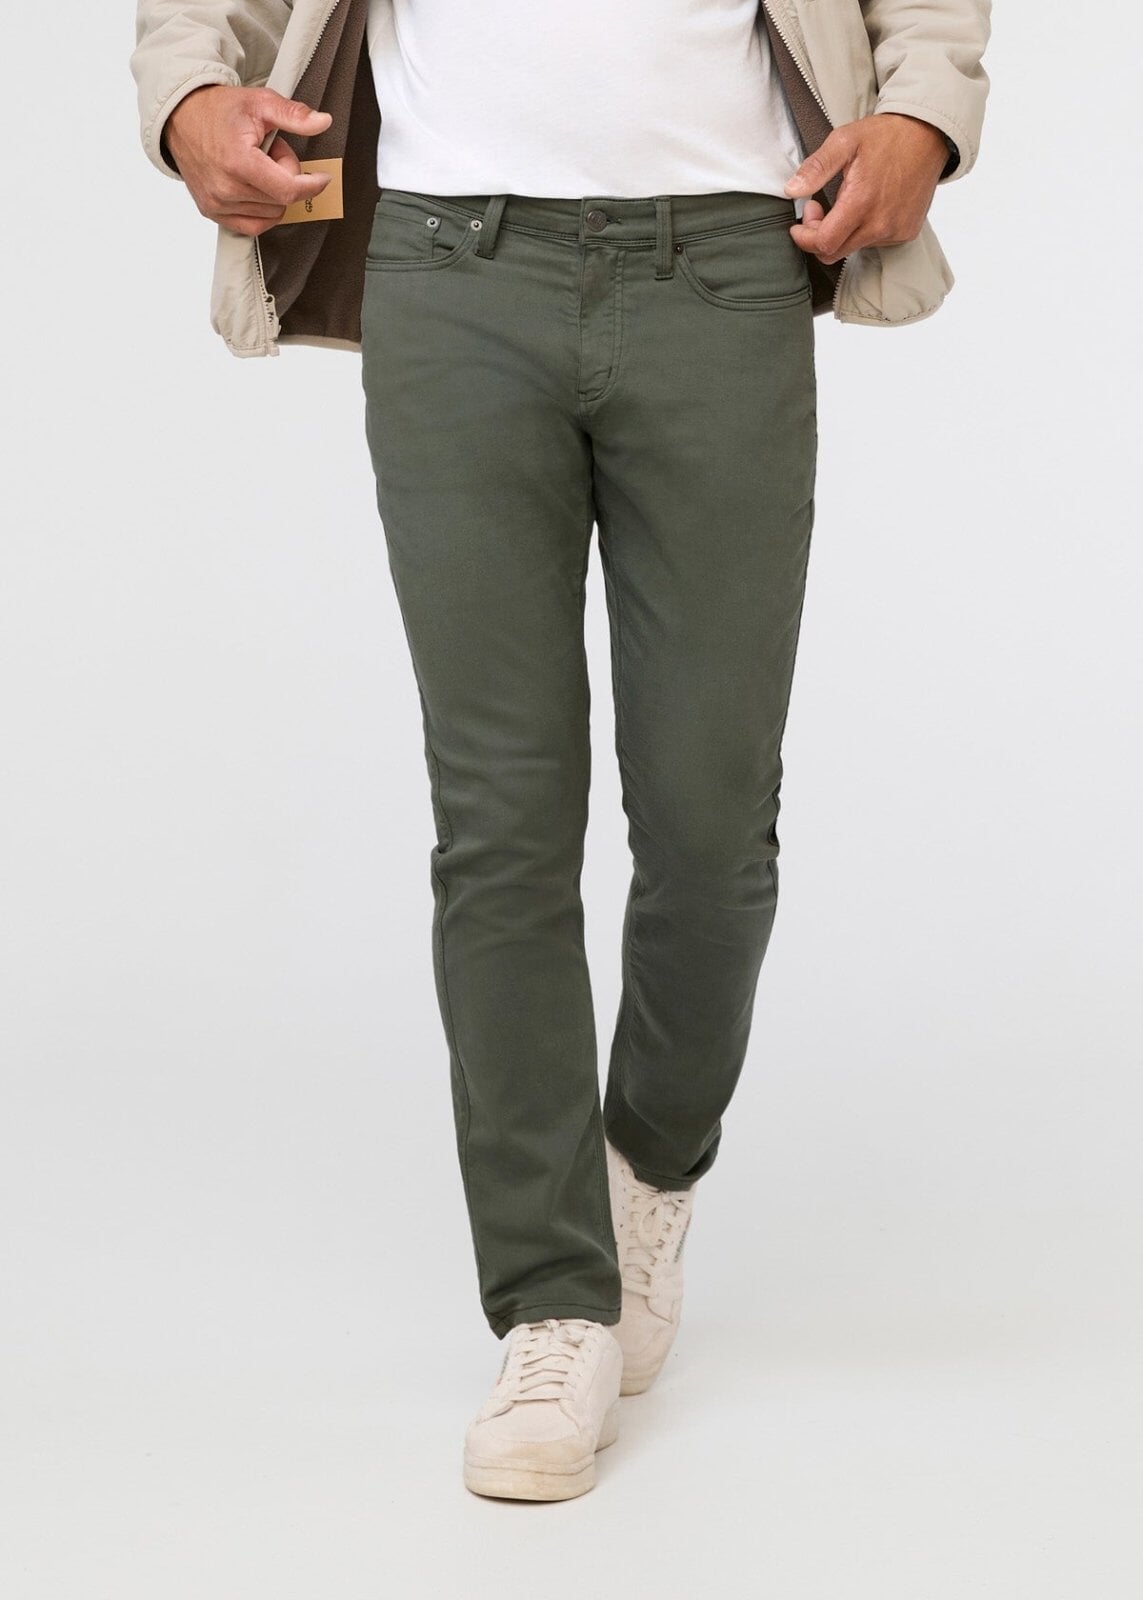 J.Crew Pants Green Slim Fit Pockets Zipper Ankle Women Size 29